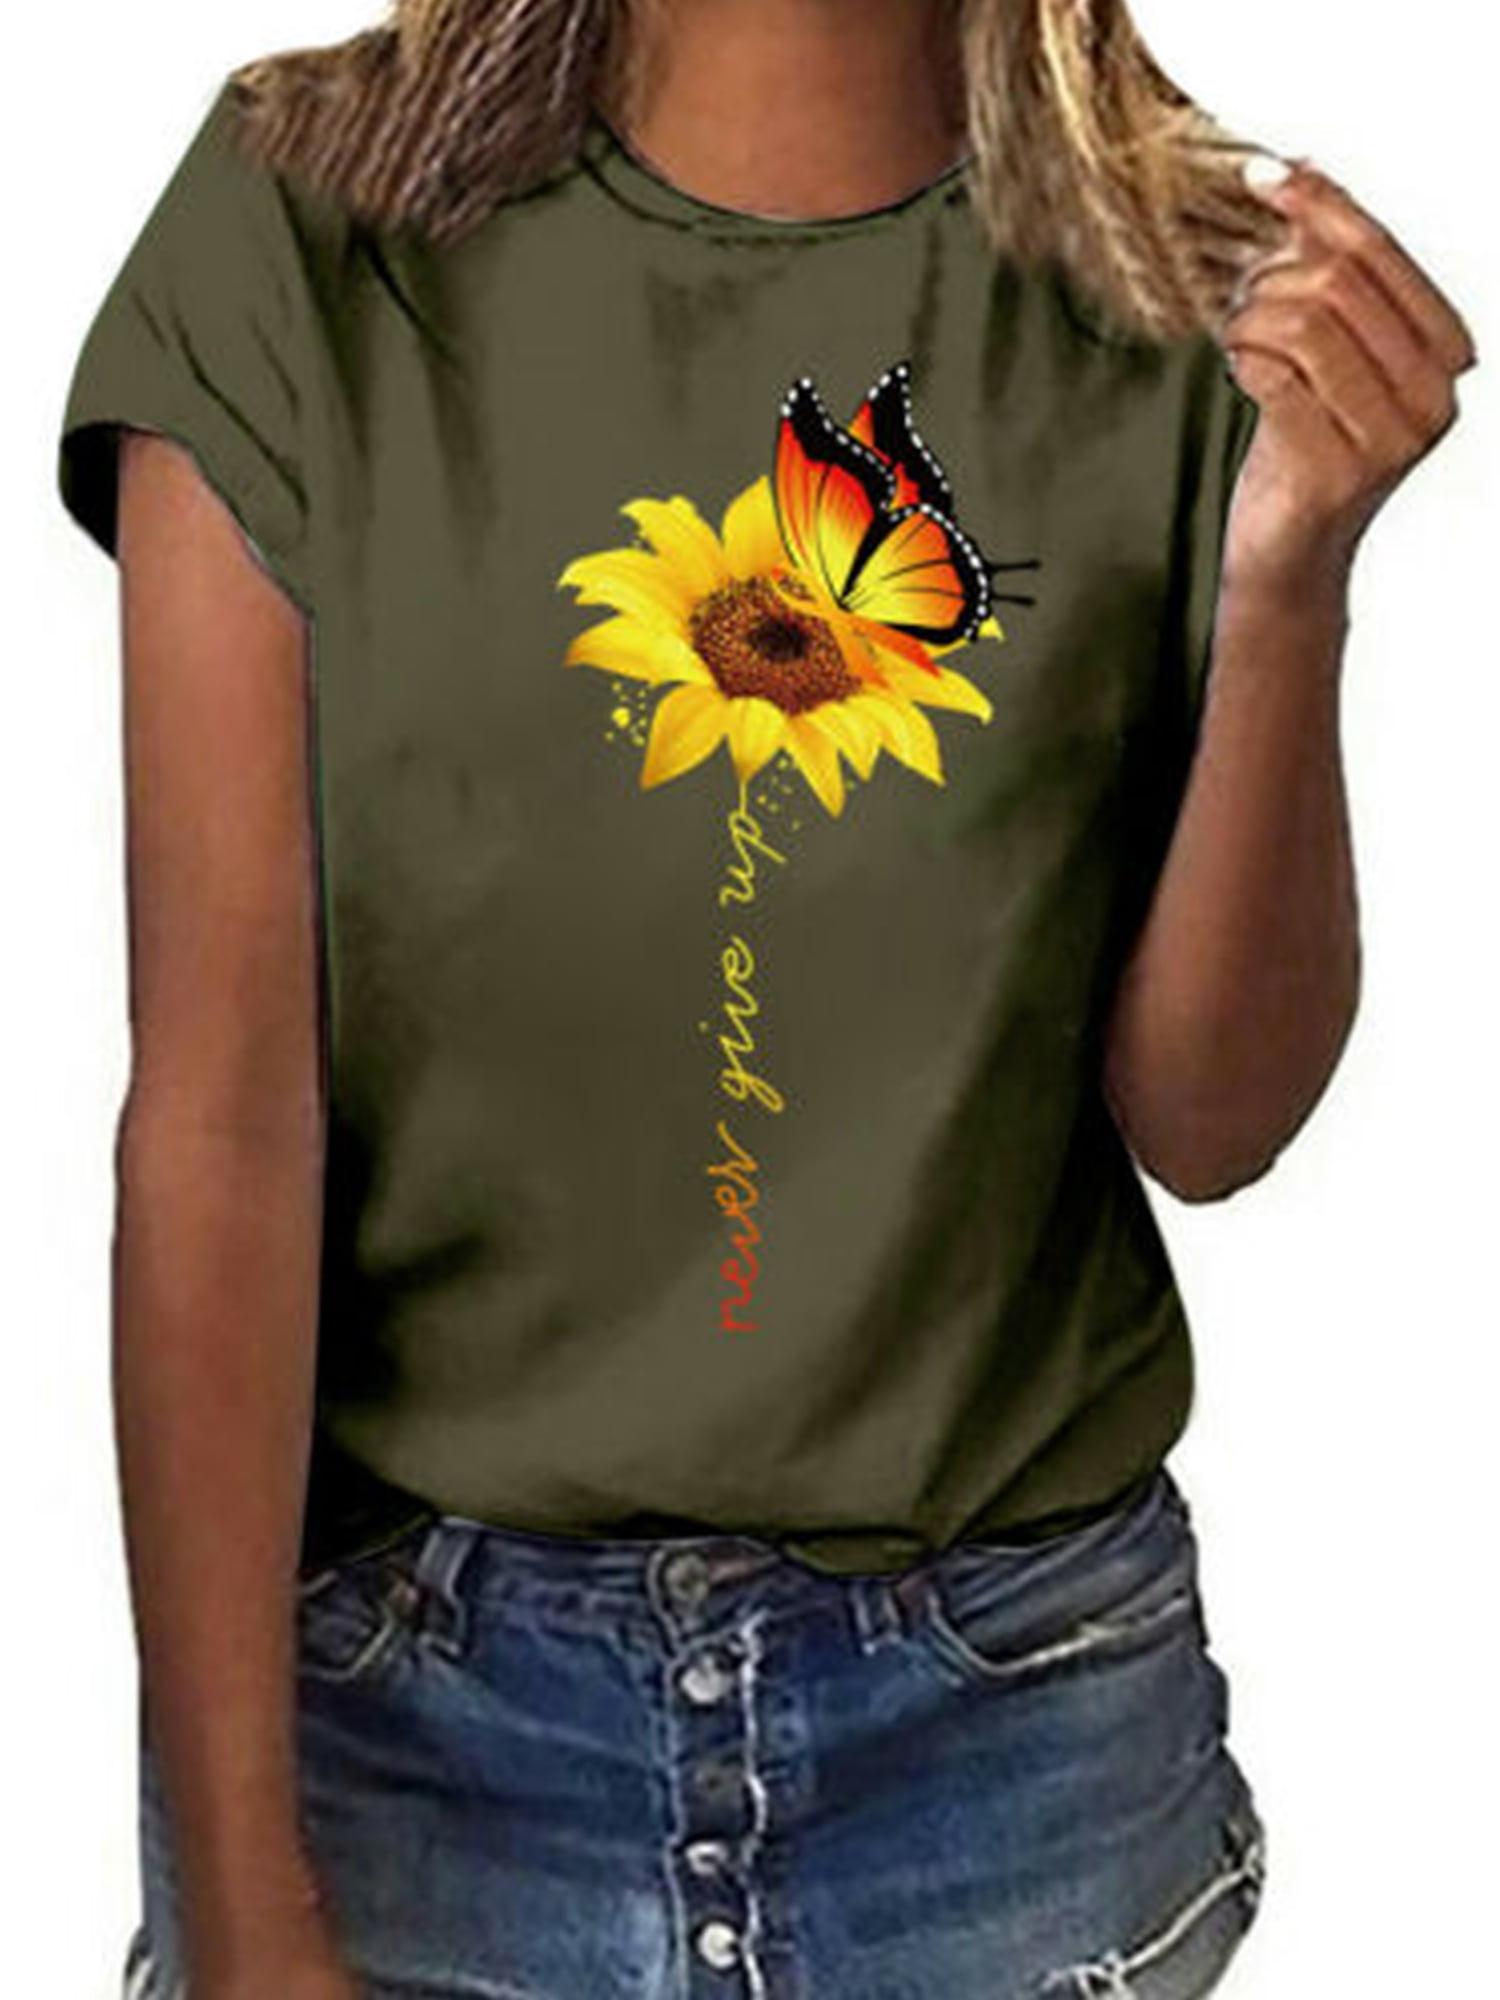 Summer Short Sleeve Tops for Women Sunflower Elephant Print Tees Comfort Soft Casual T-Shirt Round Neck Blouses 